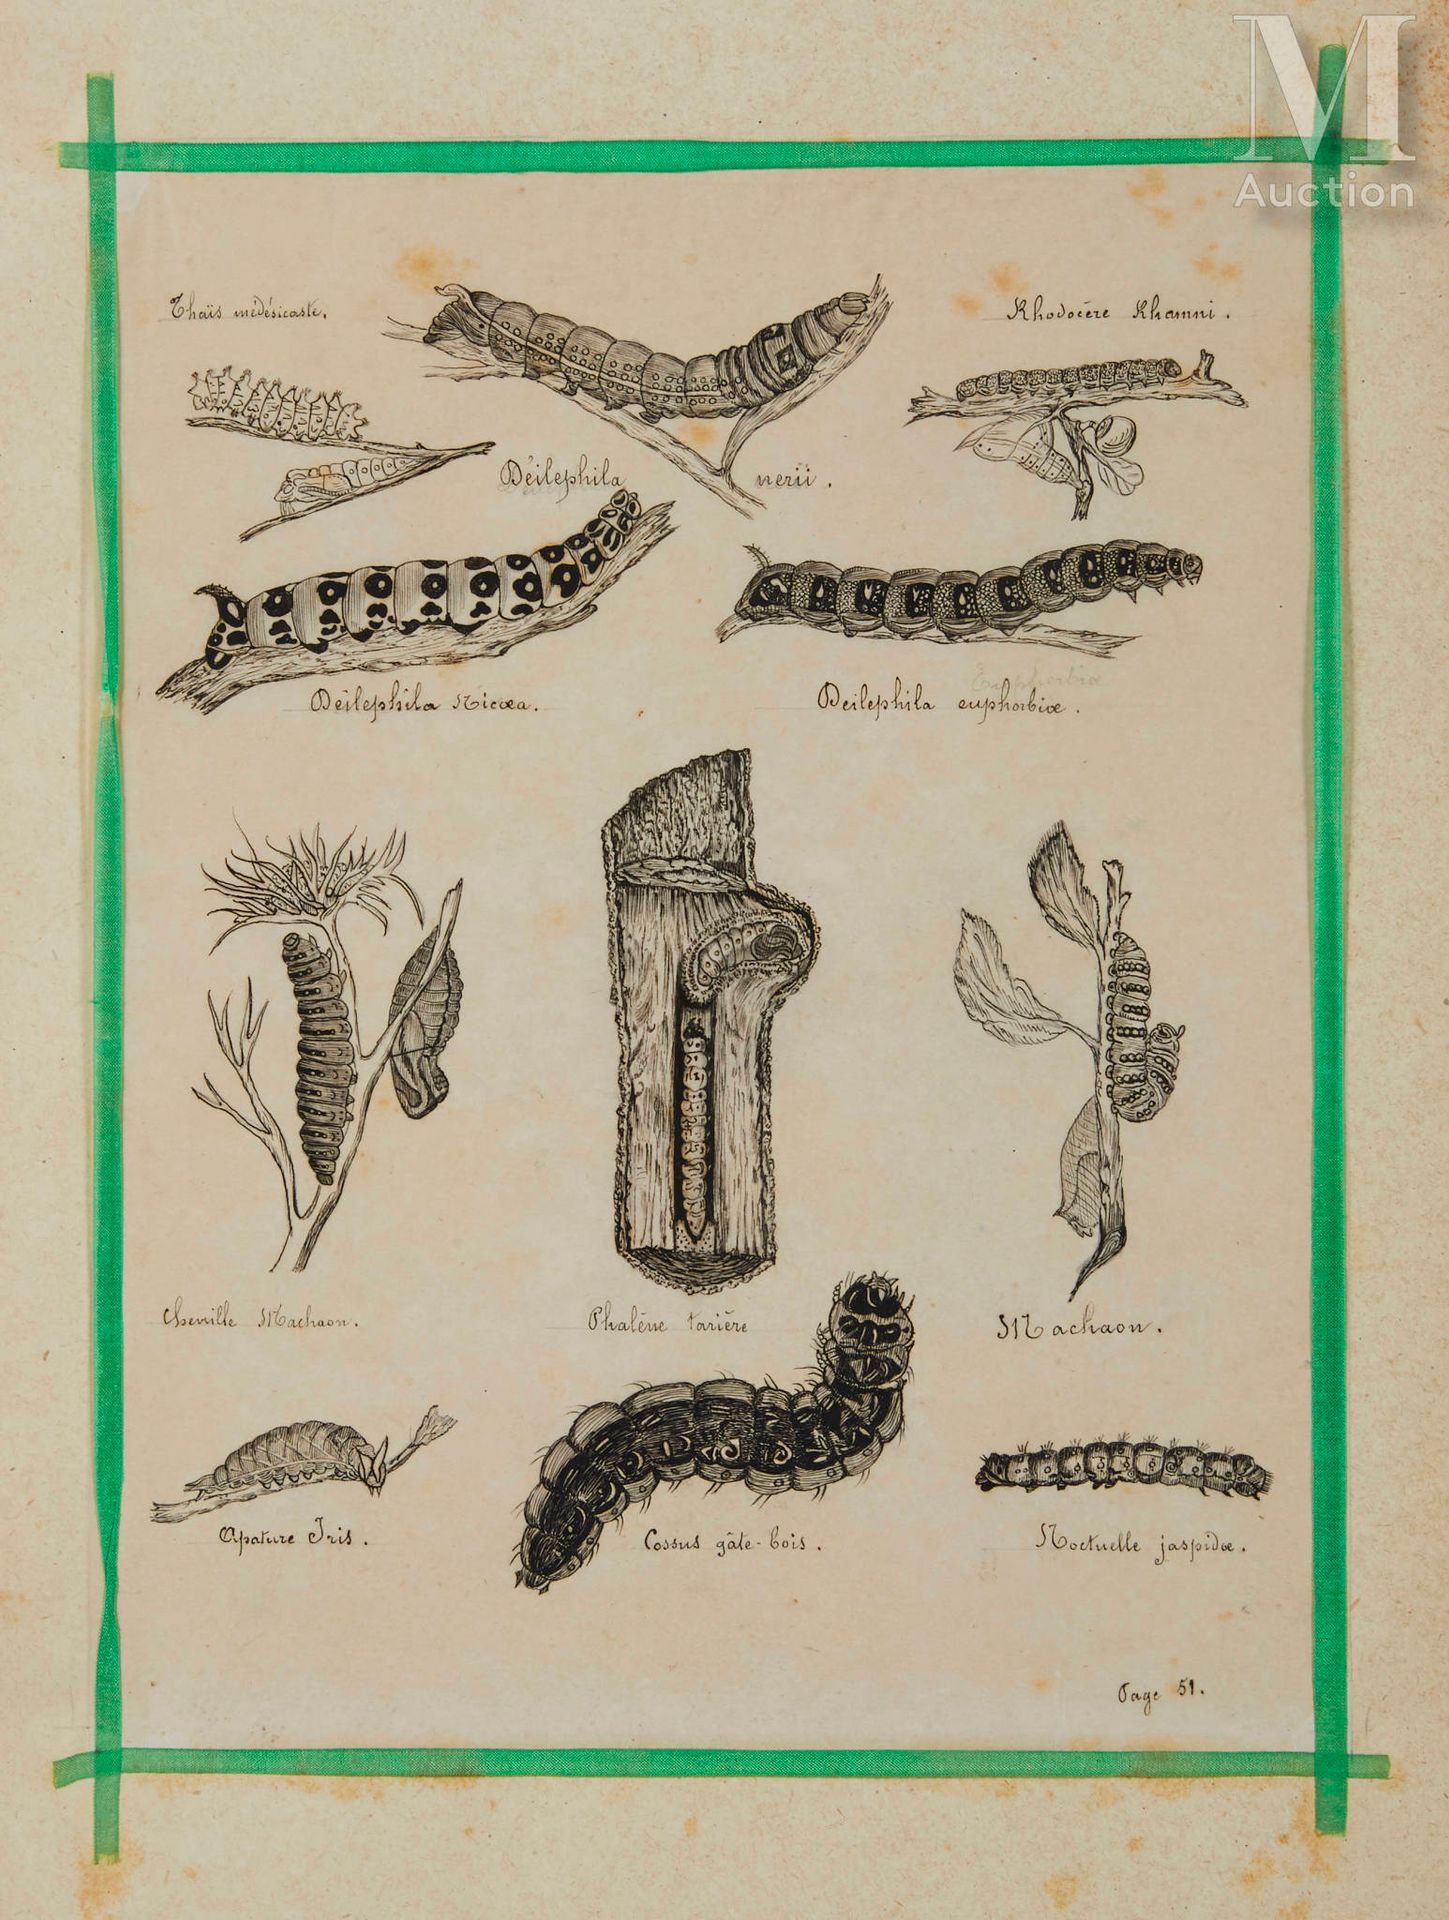 PAPILLONS ET CHENILLES - ALBUM DE DESSINS (1881-1882) 79 页装饰有描图纸上的蝴蝶和毛毛虫笔墨画，每幅描图&hellip;